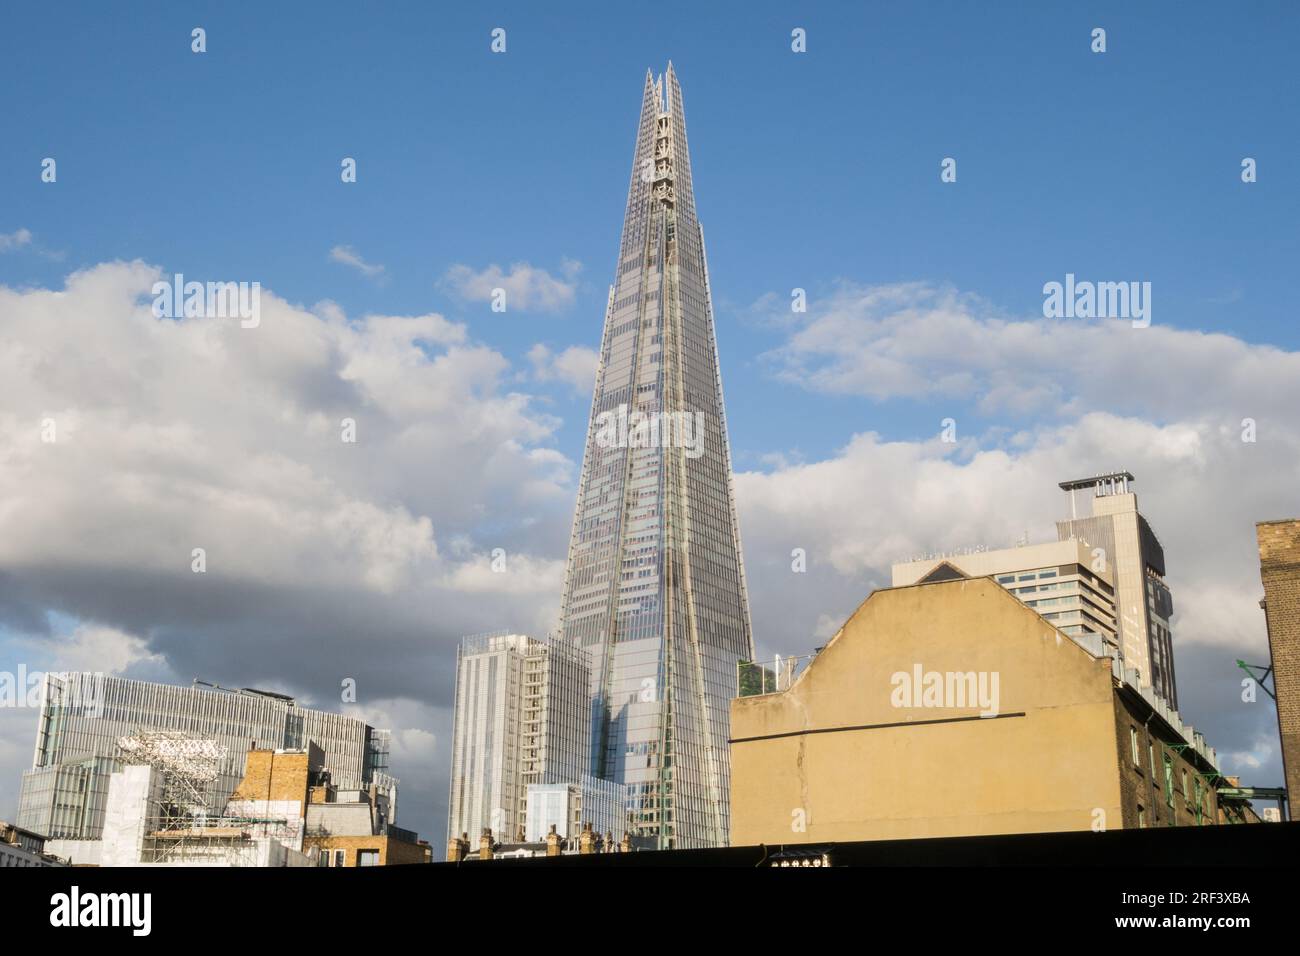 The Shard, a 95-story skyscraper designed by the Italian architect Renzo Piano, Southwark, London, England. Stock Photo